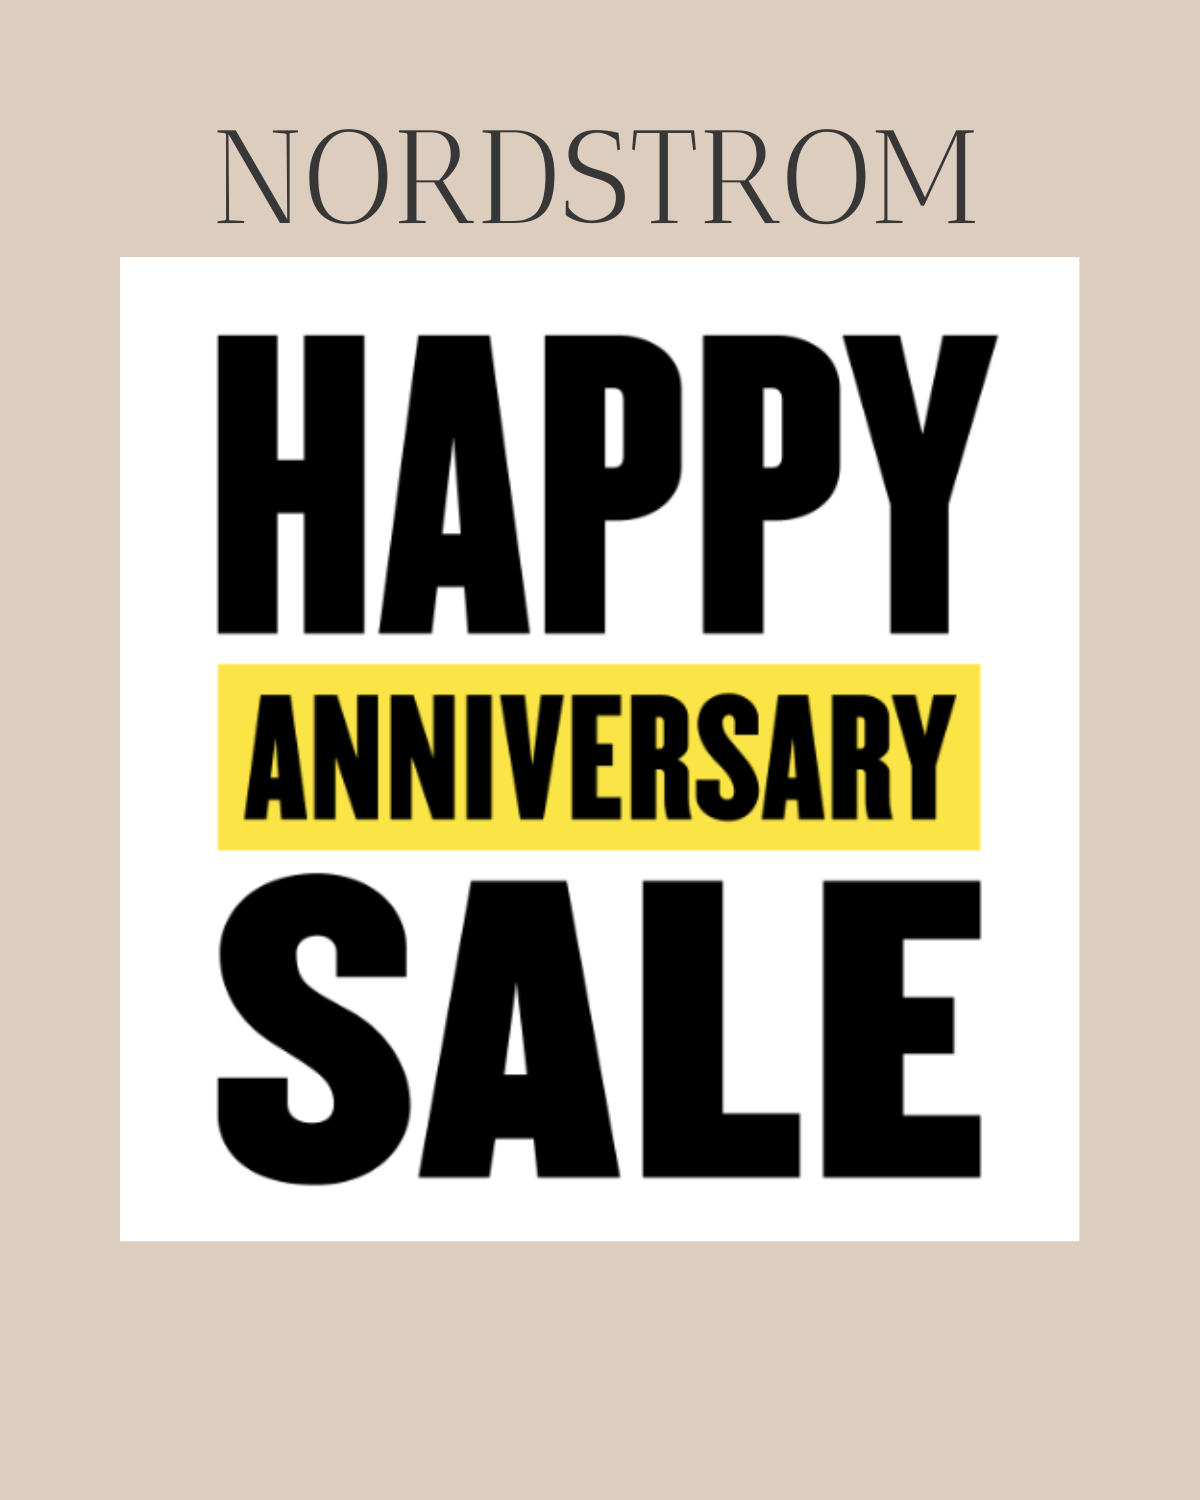 nordstrom anniversary sale, NSALE, women's fashion, deals, clothing deals, women's style, 